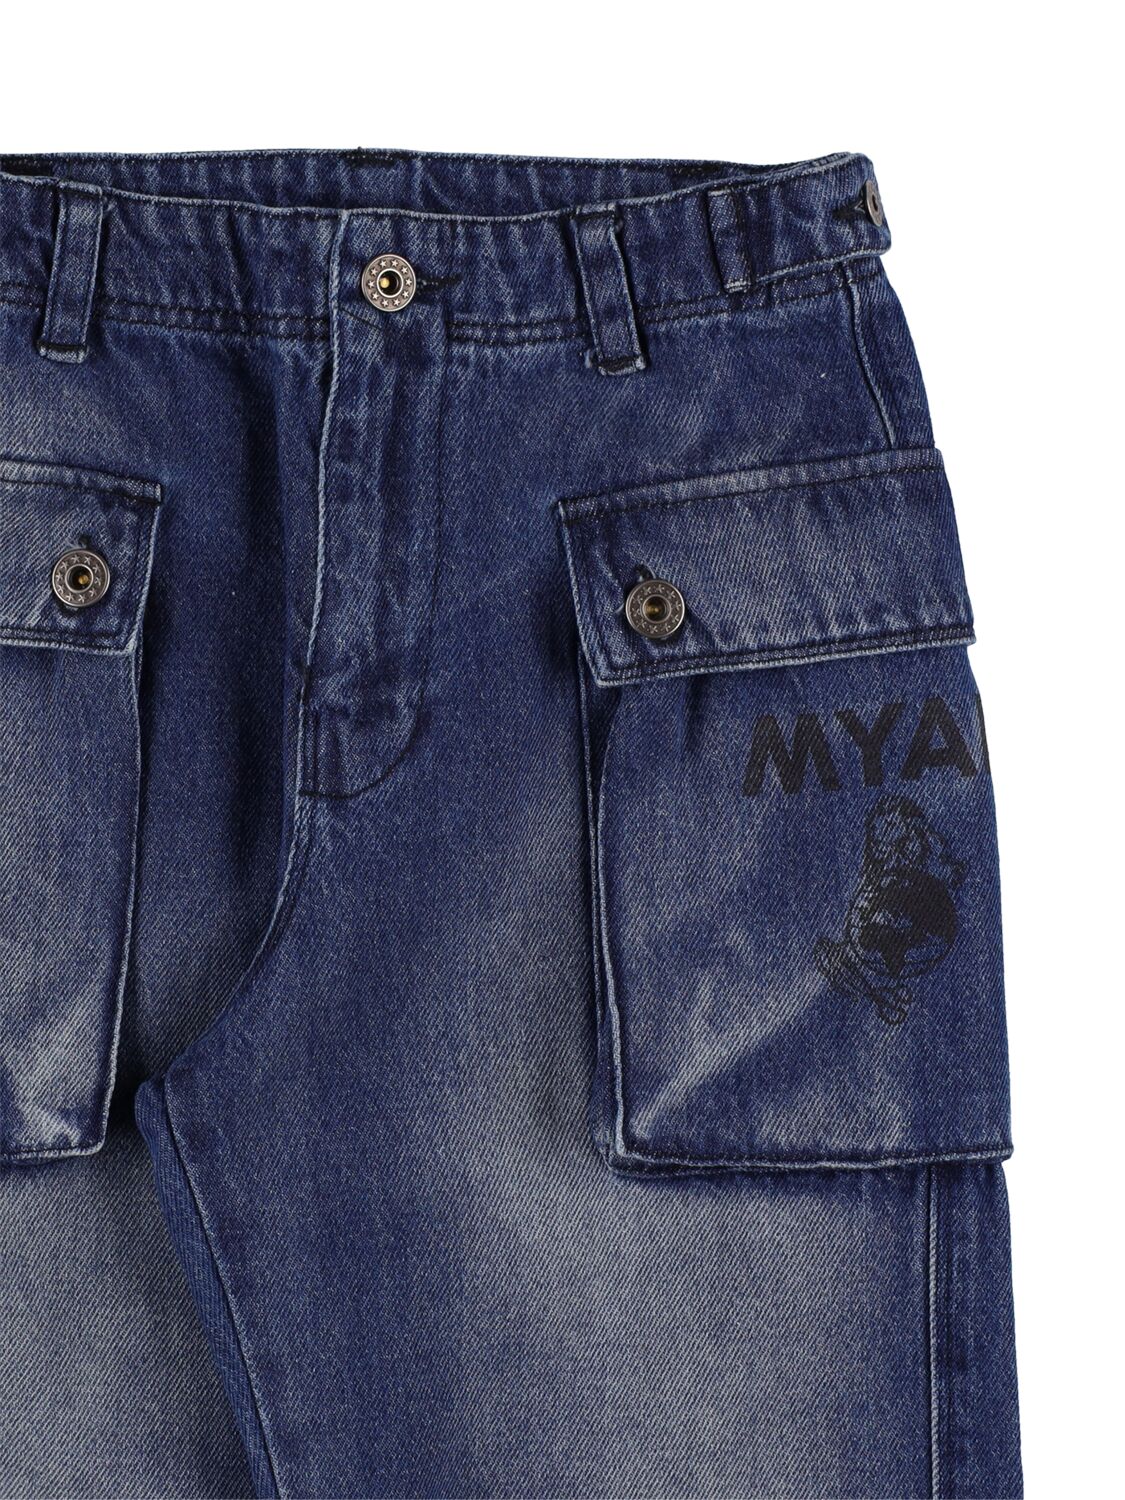 Shop Myar Recycled Cotton Denim Jeans